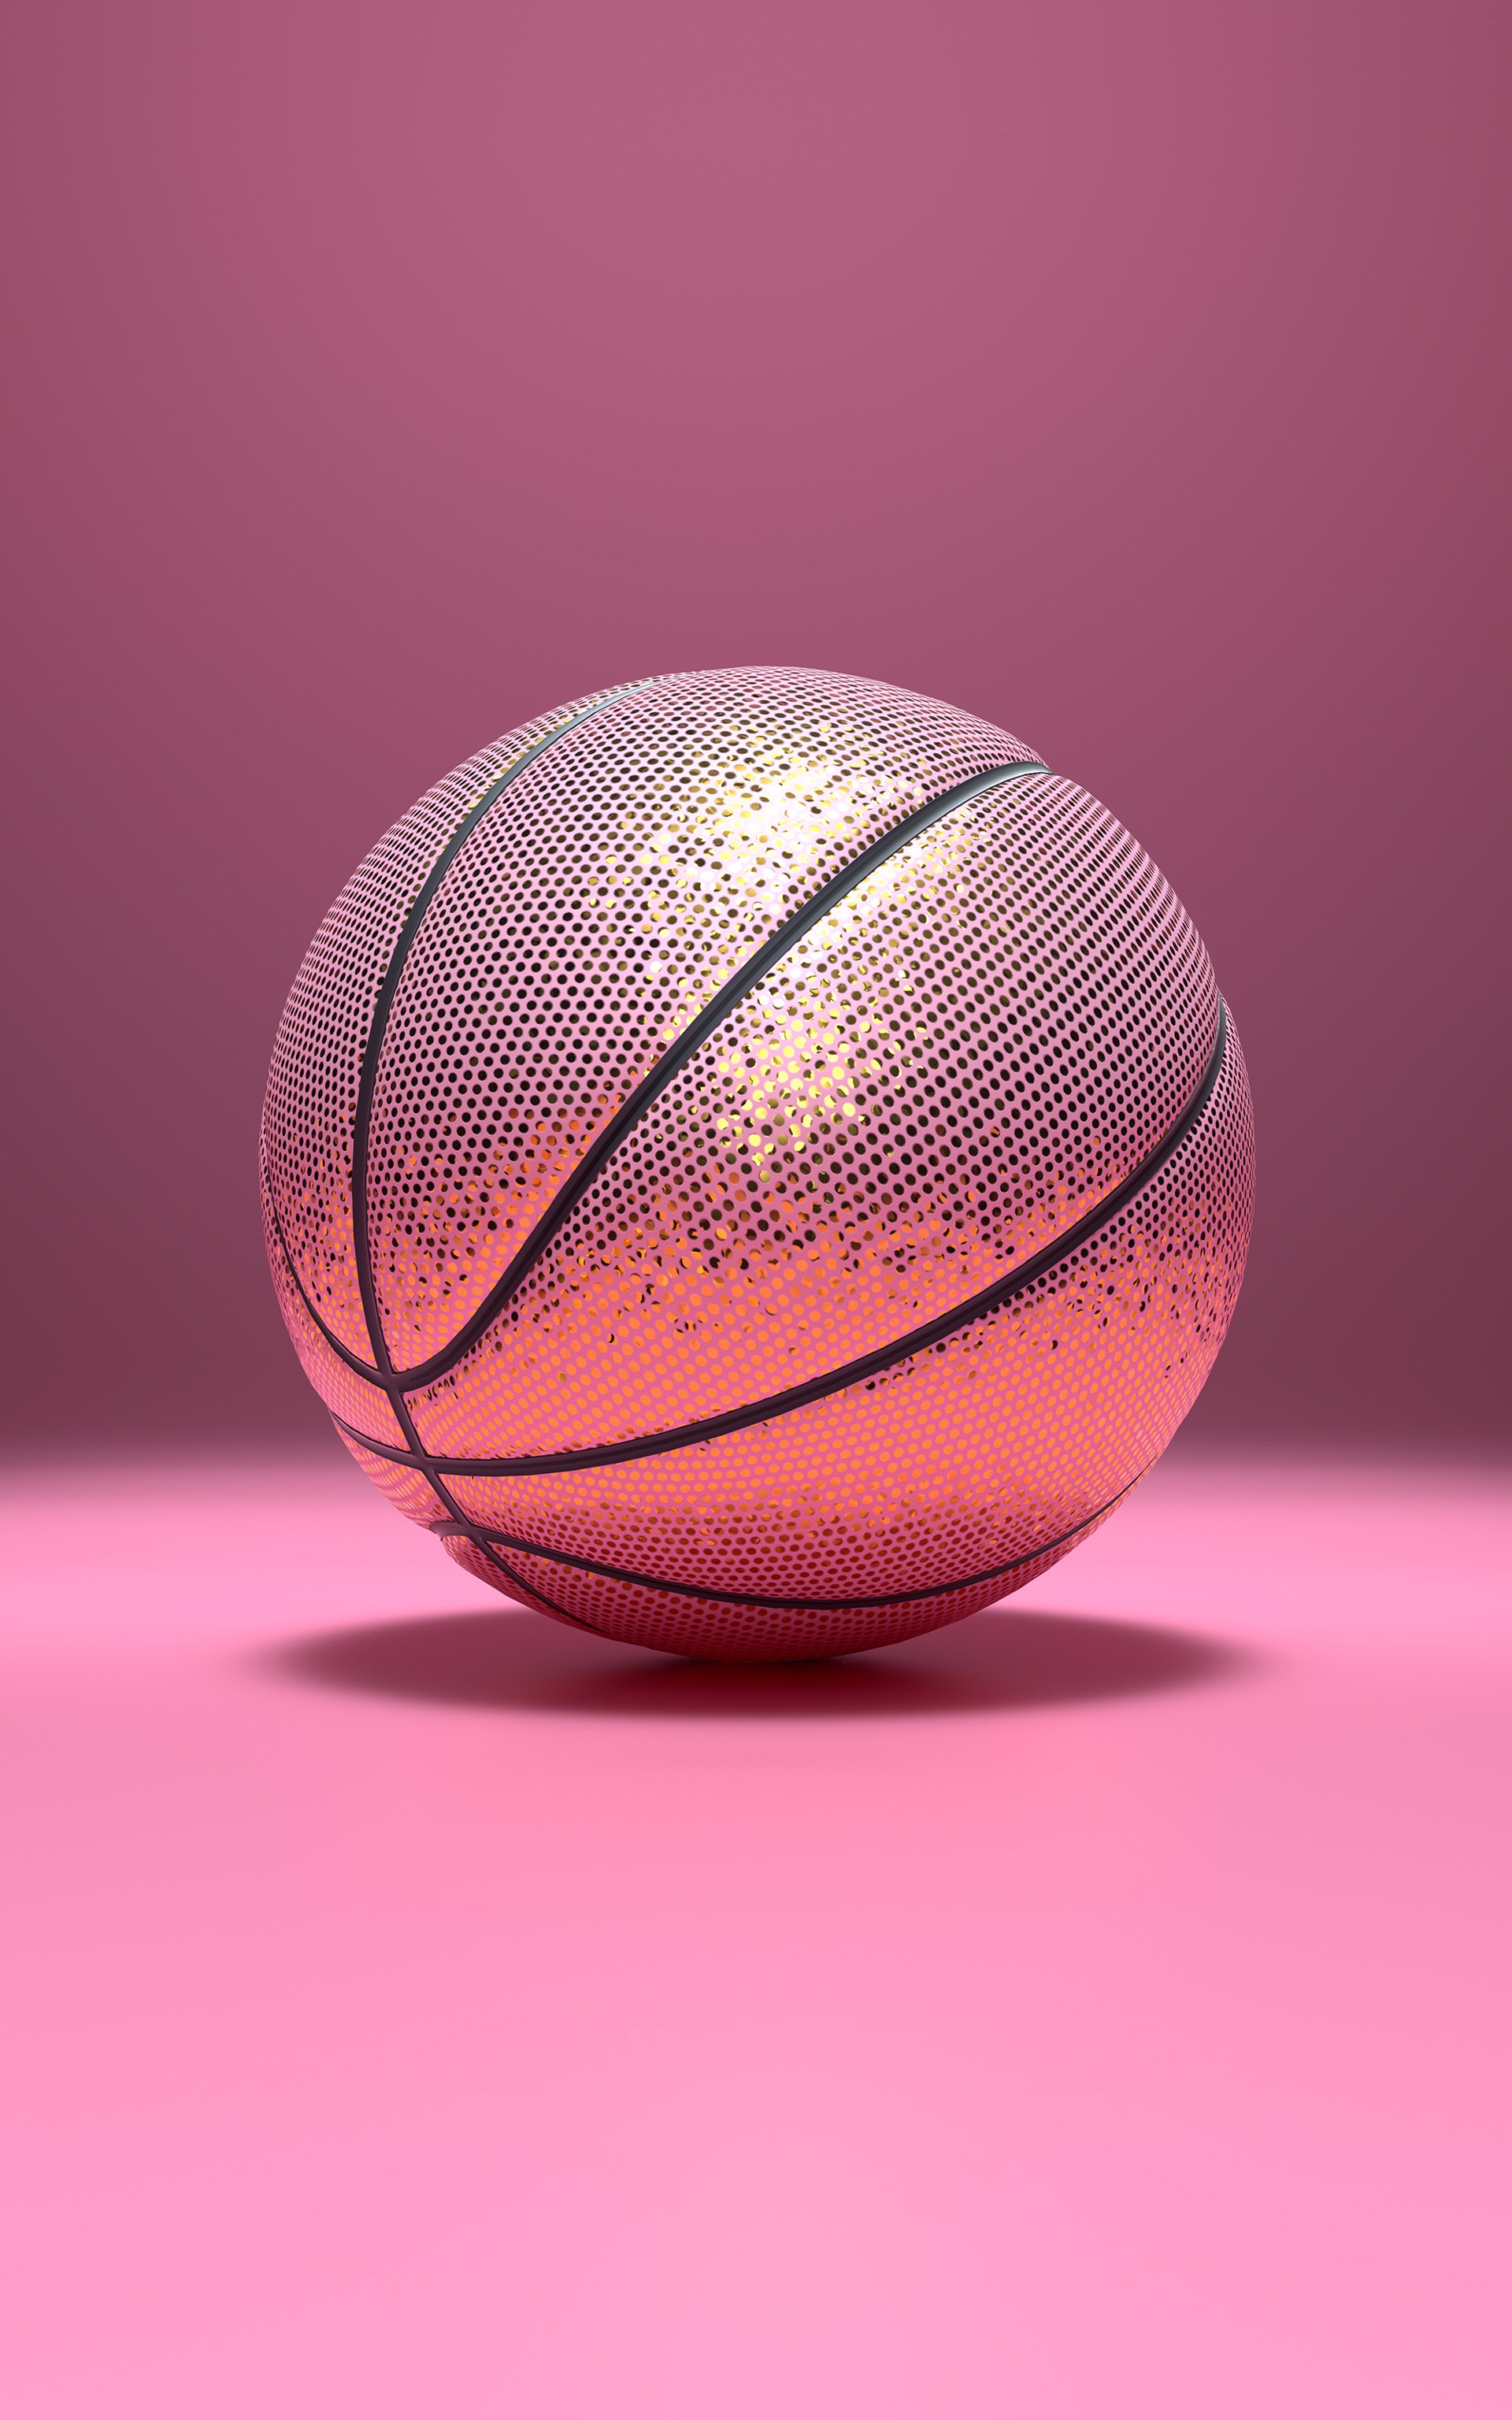 Glitter Basketball by Dzanar Abbas-Zade